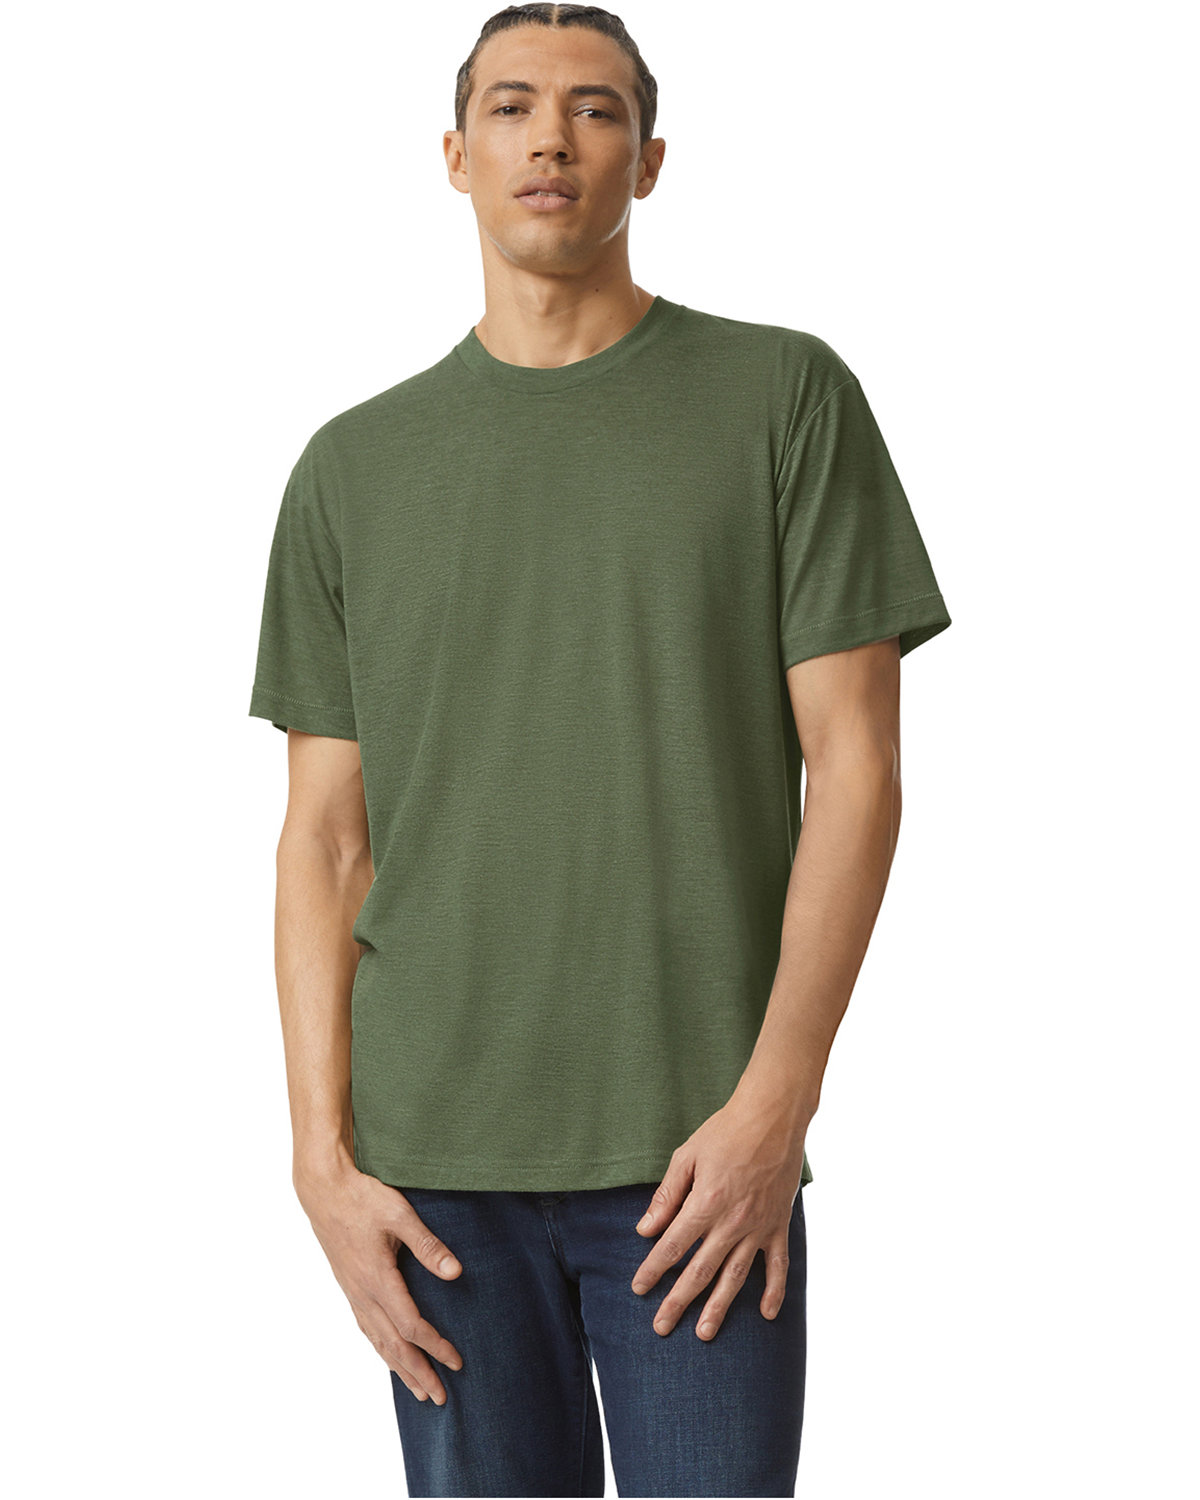 American Apparel Unisex Triblend Short-Sleeve Track T-Shirt tri olive 